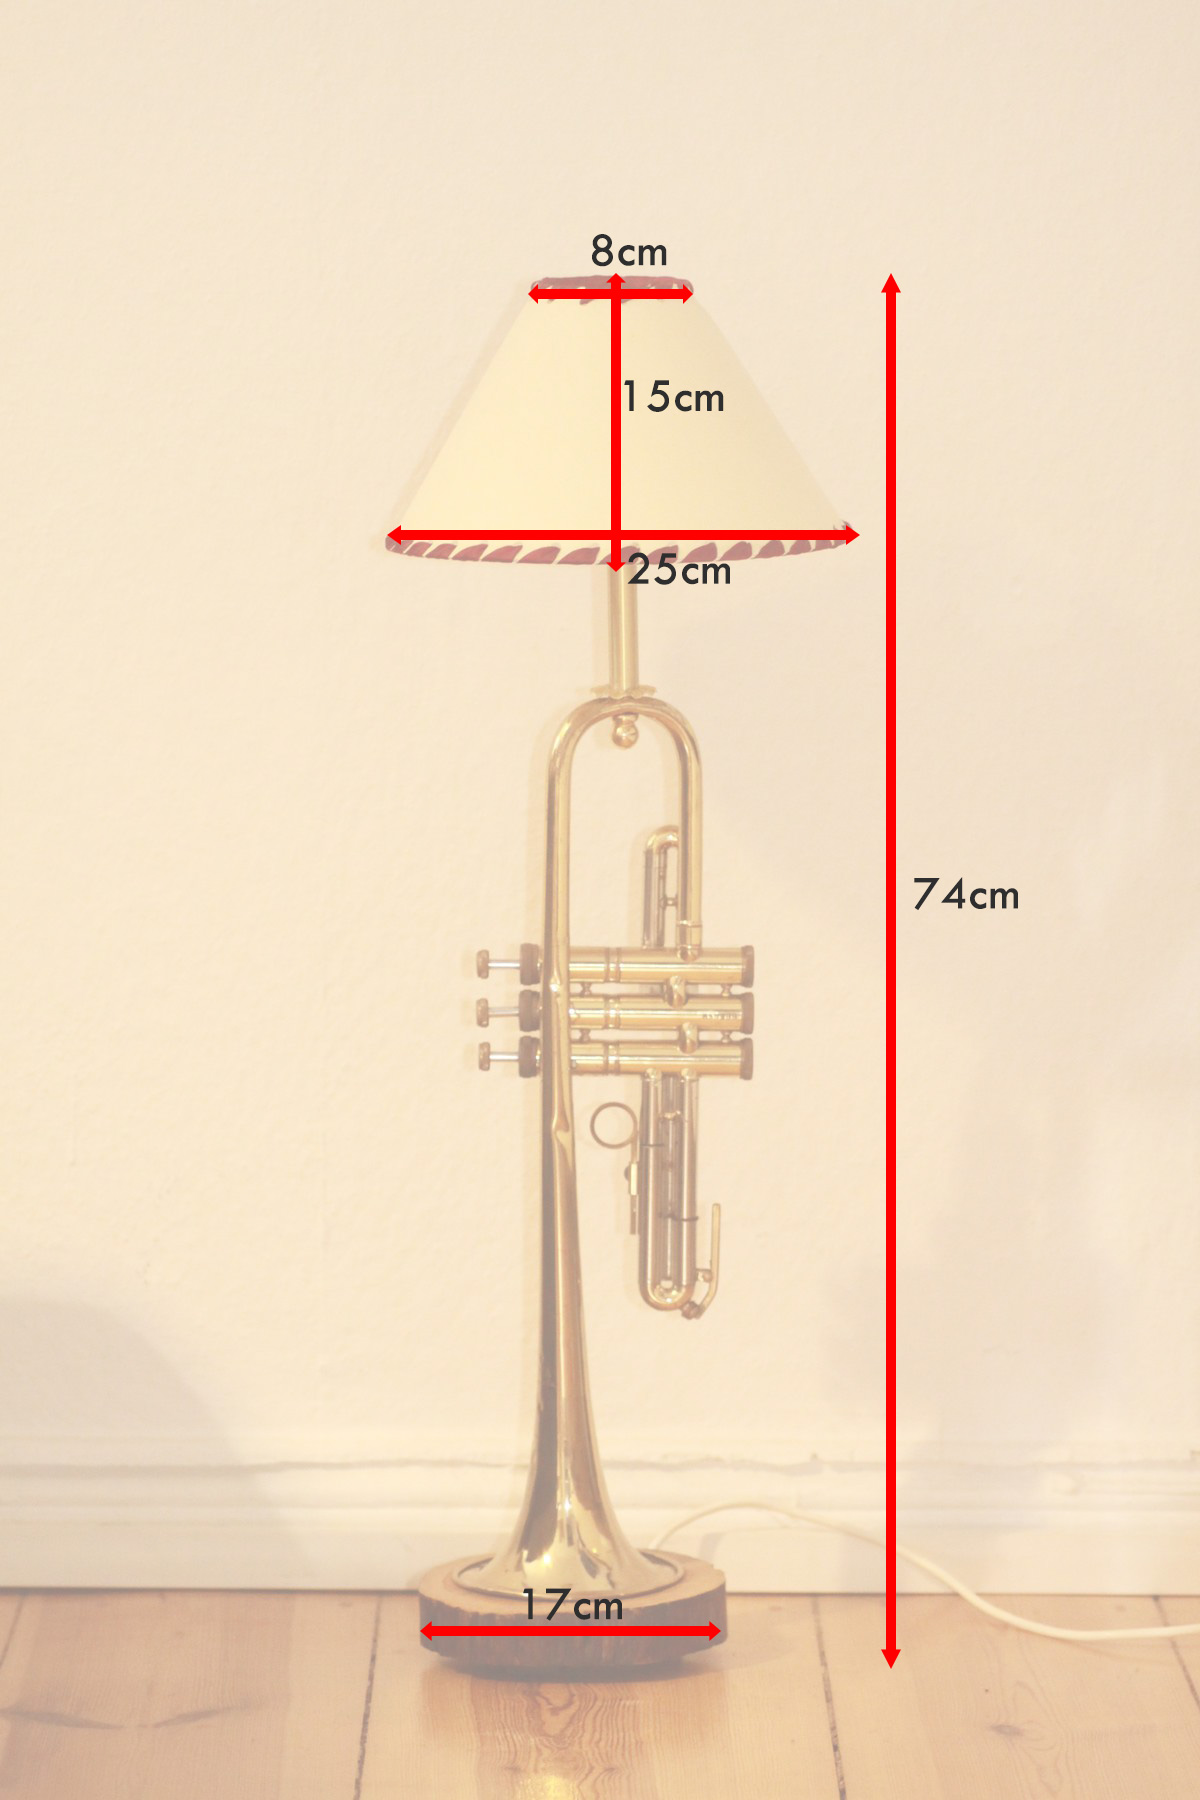 Trumpet lamp floor lamp gold beige red vintage handcmande 41A